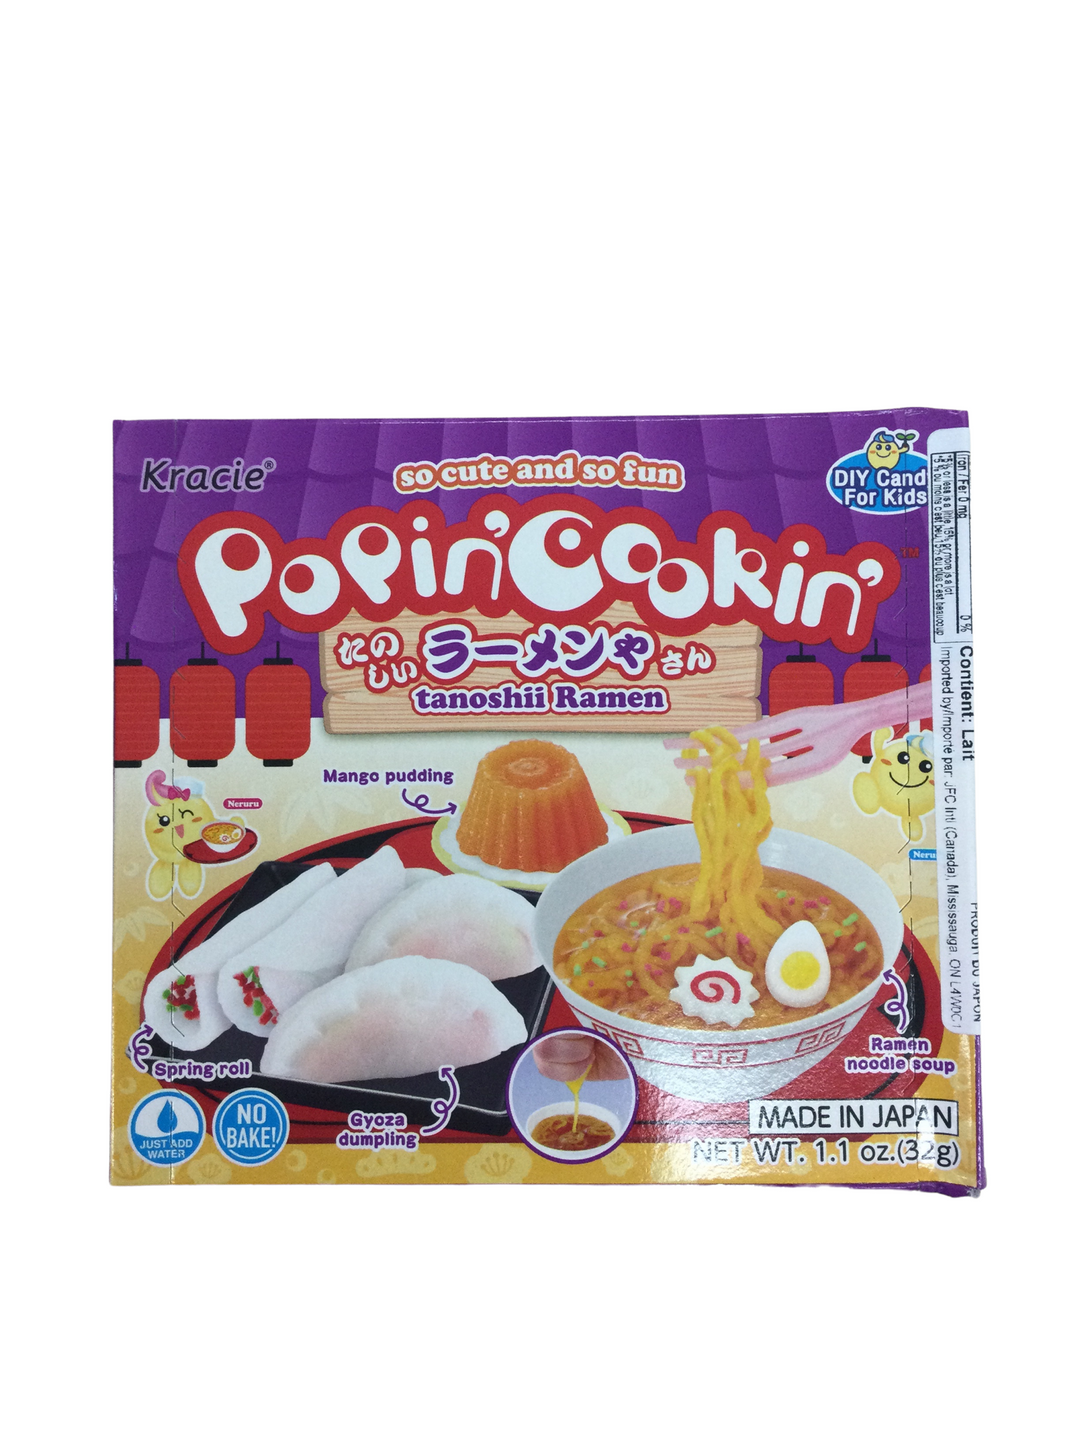 Popin’ Cookin’ Tanoshii Ramen